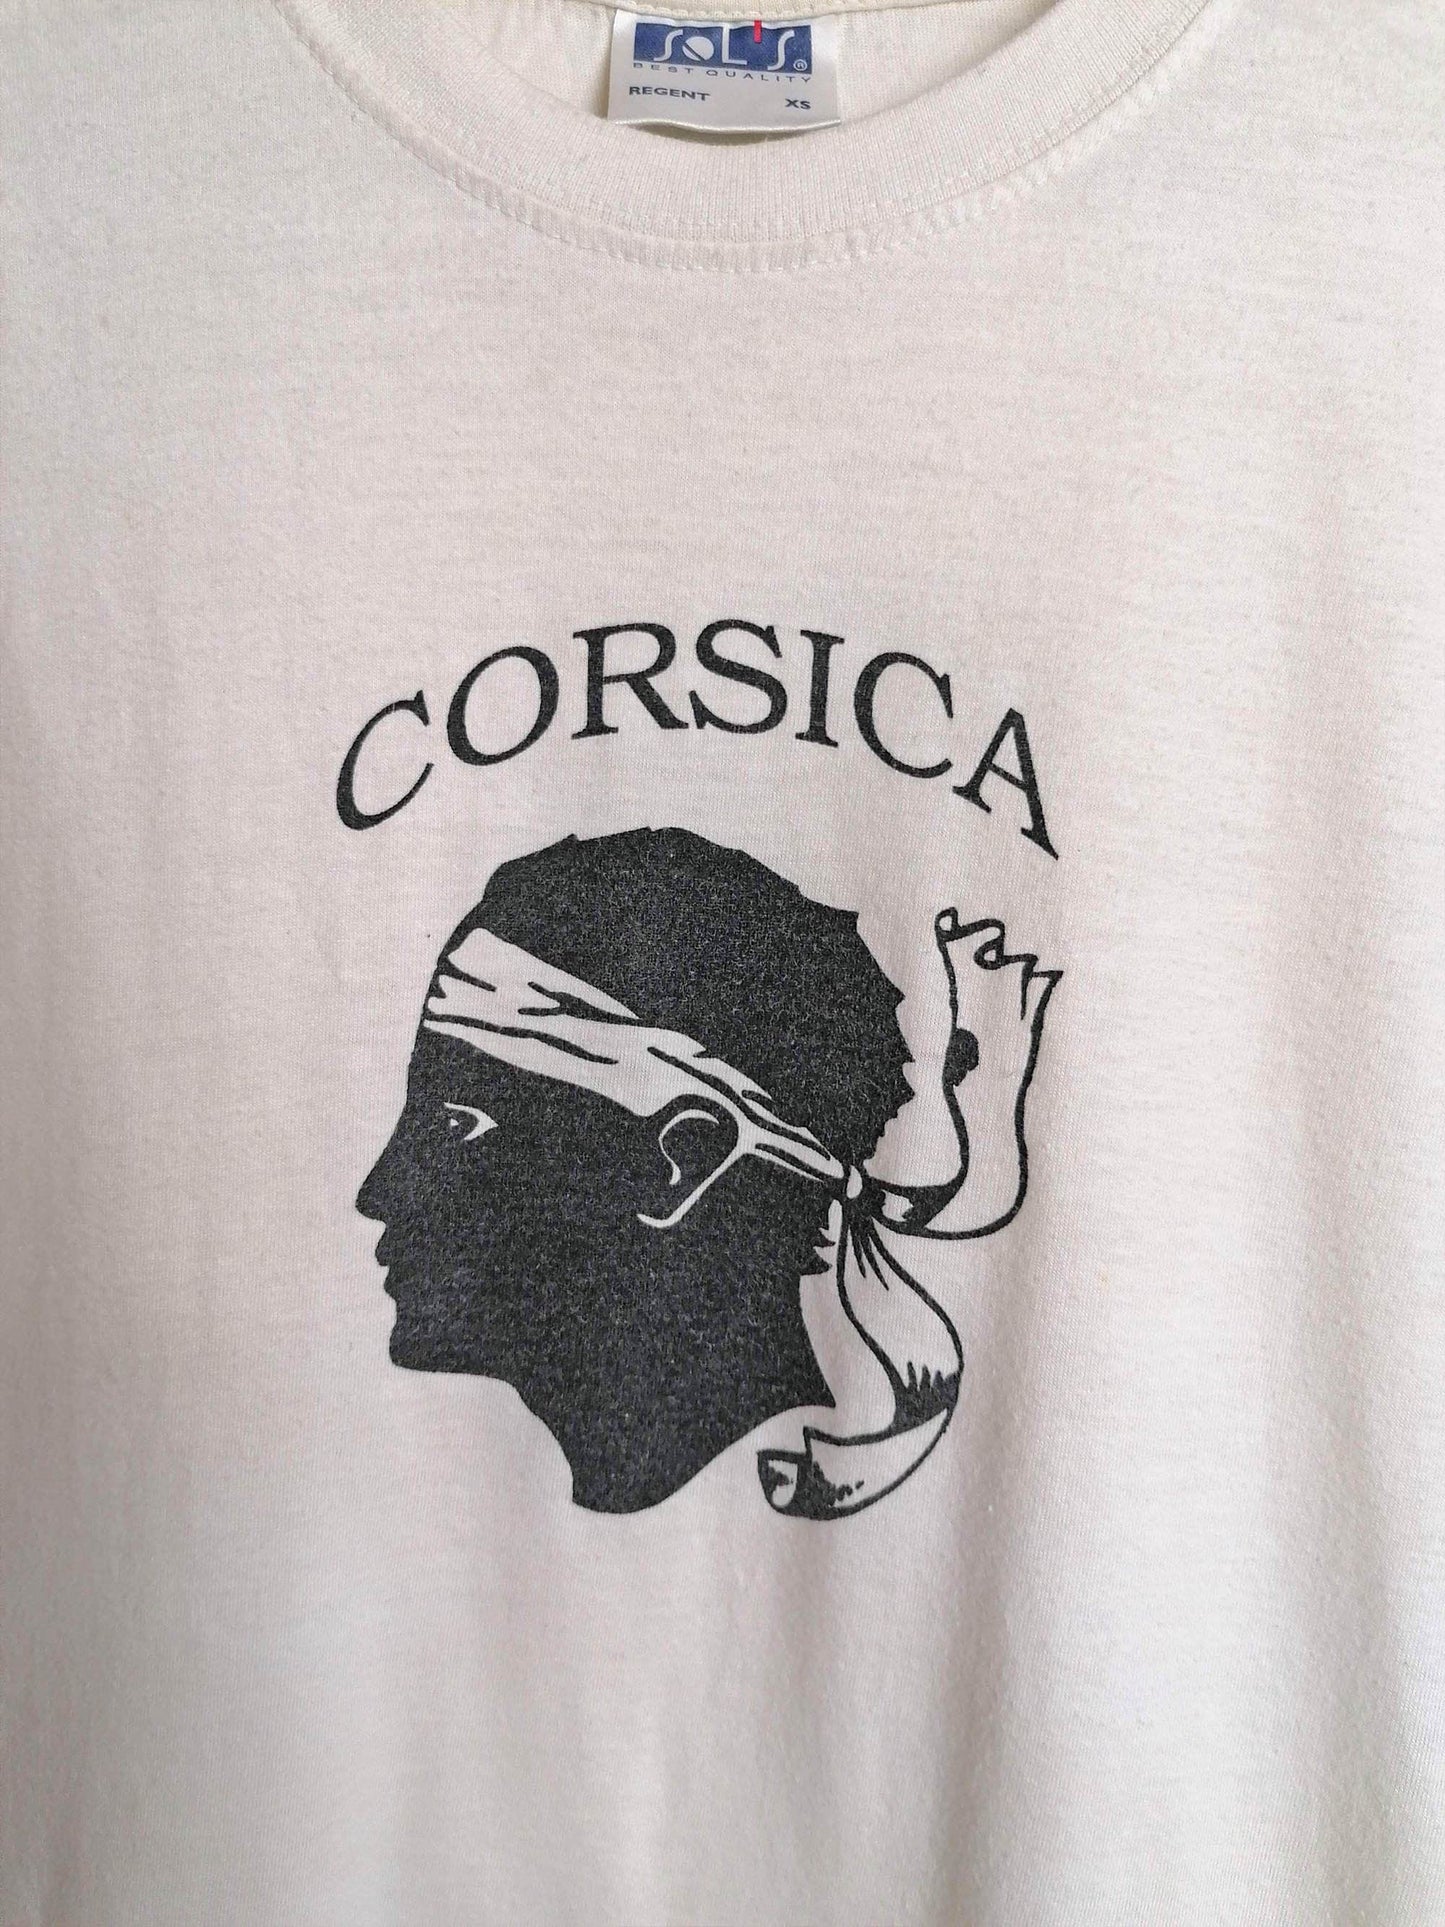 80's 90's SOL'S CORSICA Retro T-shirt - size XS